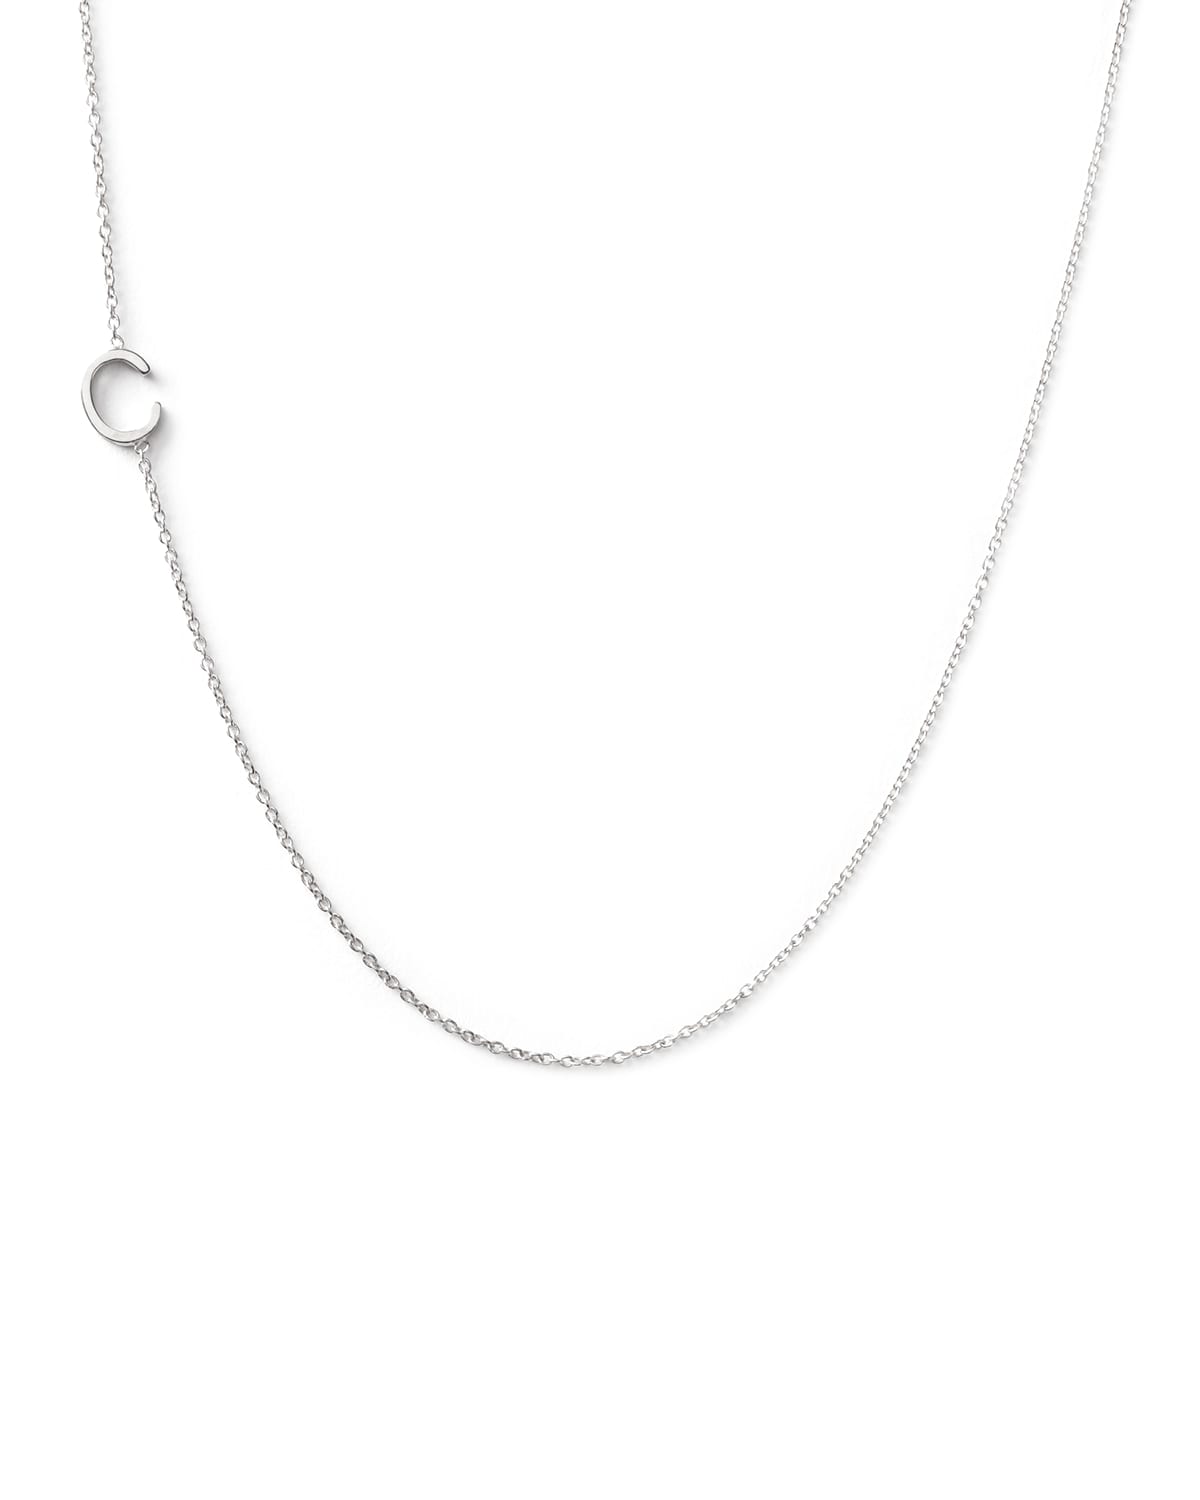 Maya Brenner Designs 14k White Gold Mini Letter Necklace In C